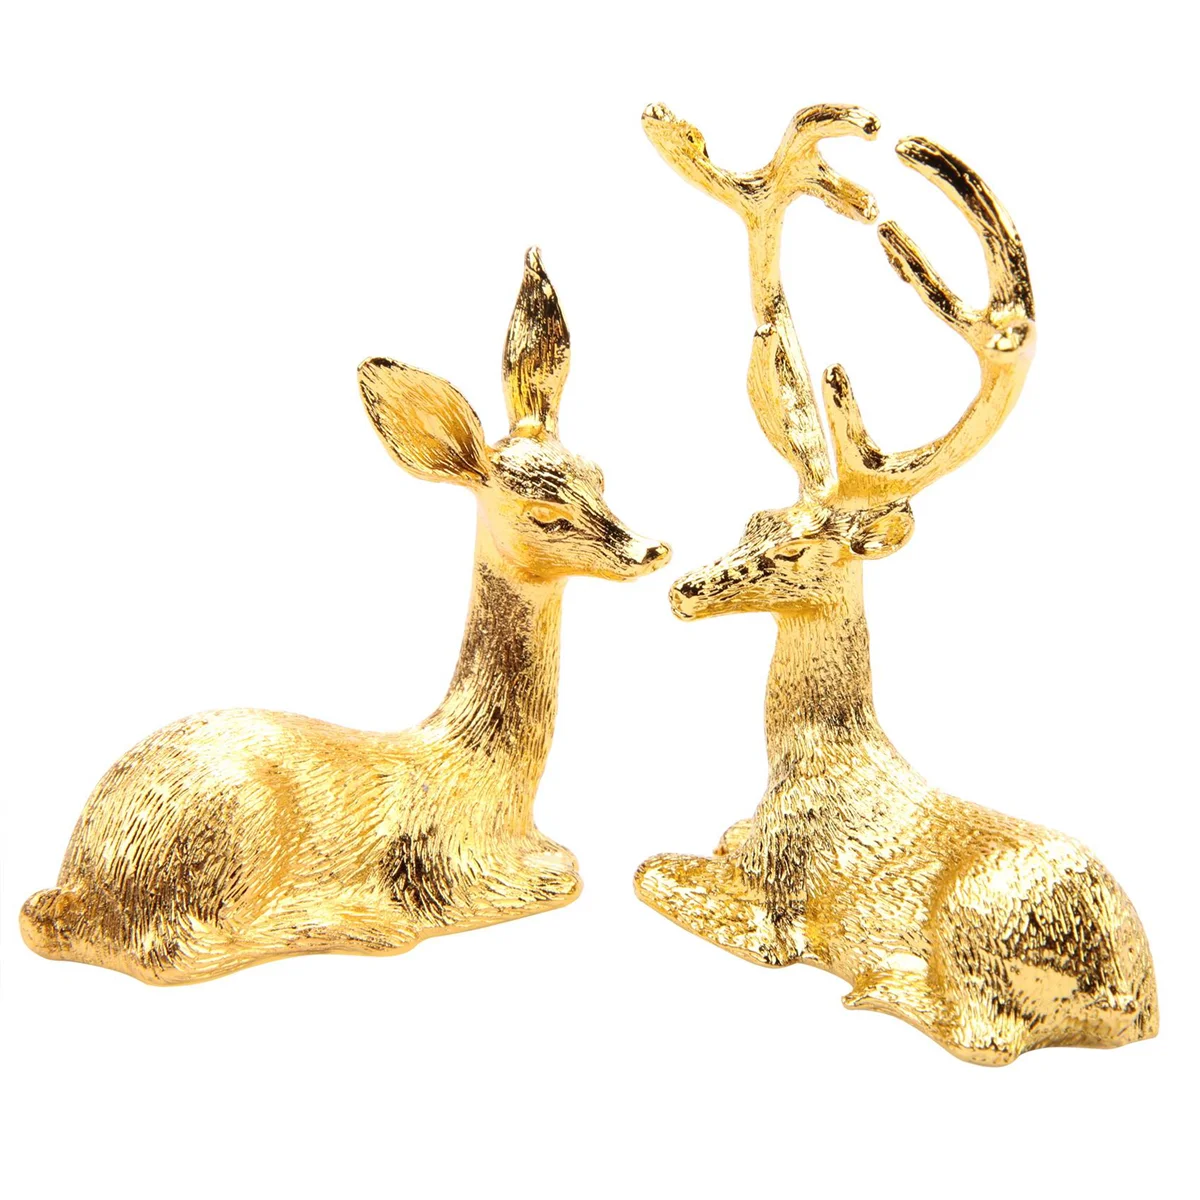 

2 PCS Noble Couple Deer Statue Home Decor Collectible Animal Elk Figurines Office Ornaments Reindeer Golden Sculptures